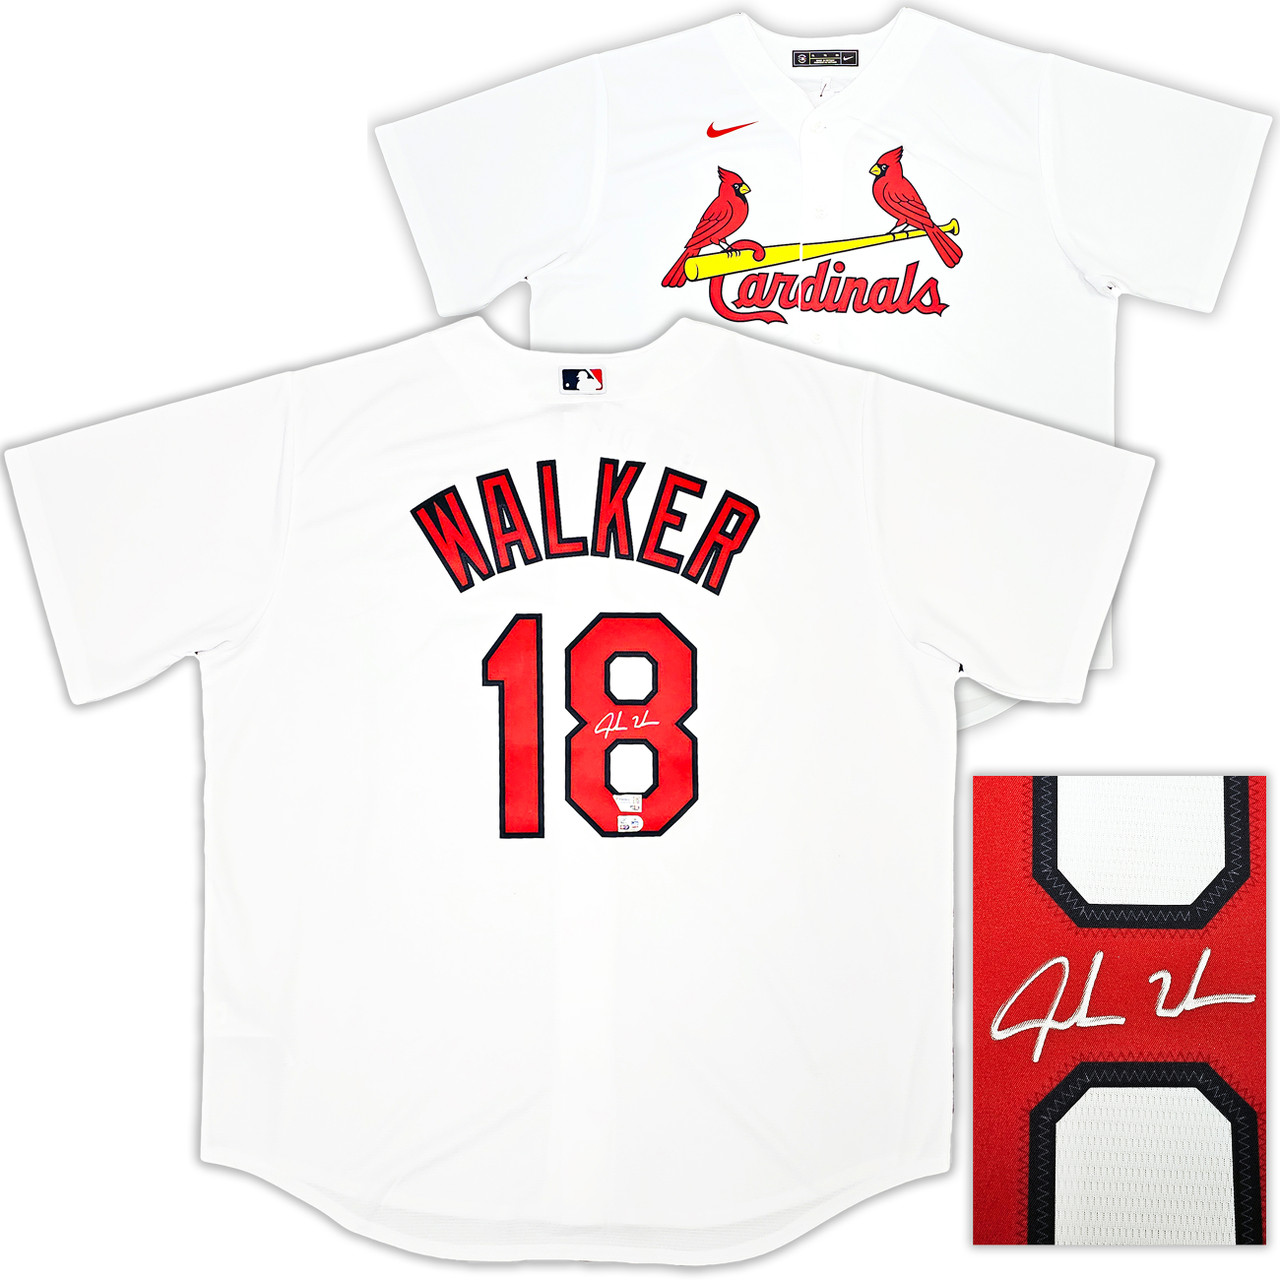 MLB, Shirts, St Louis Cardinals Hockey Jersey Xl